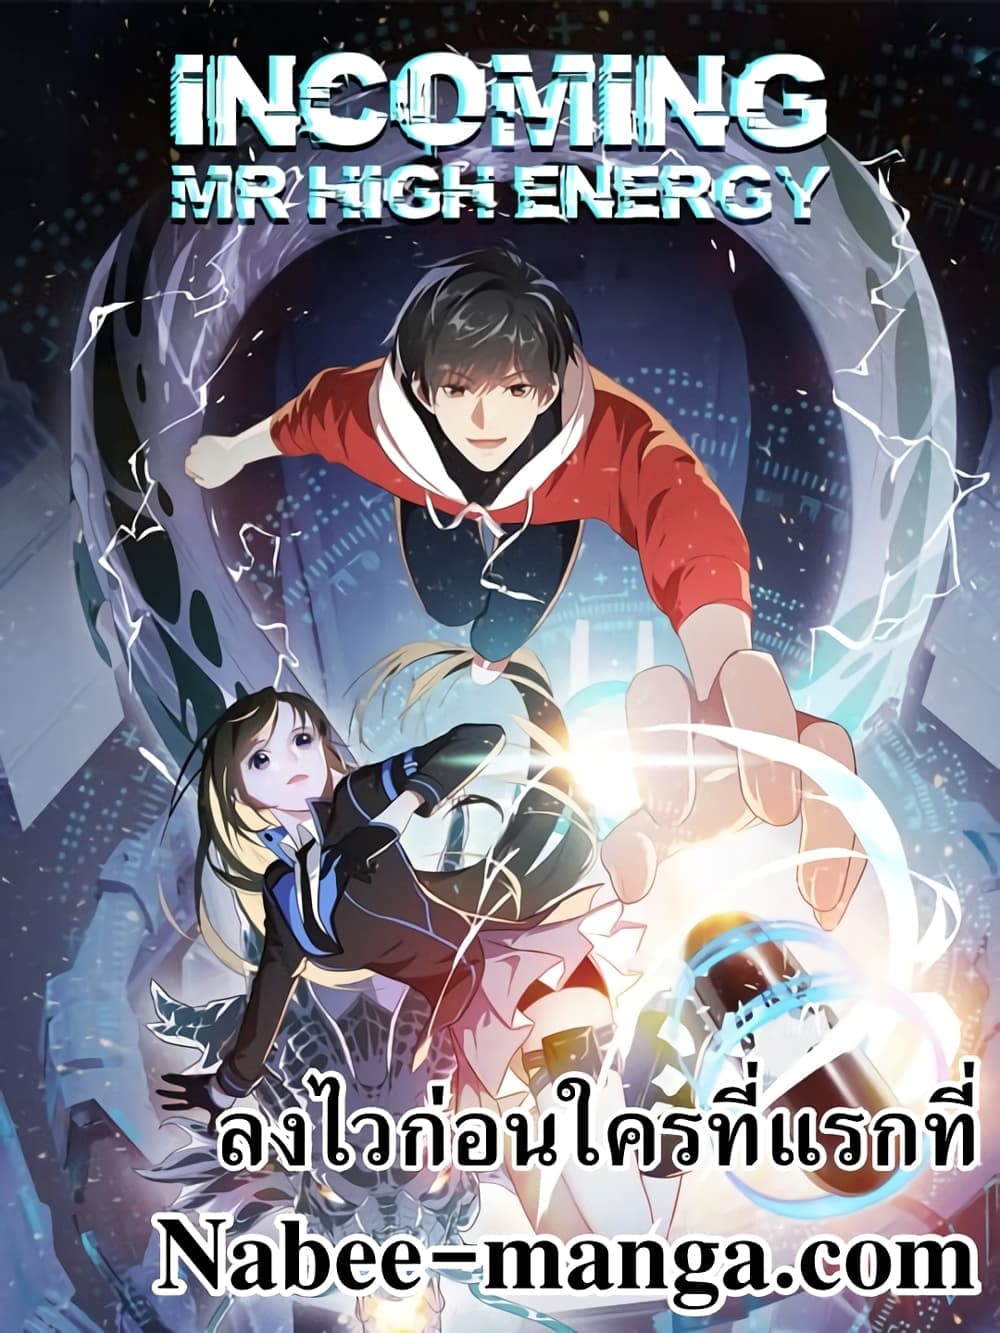 High Energy Strikes à¸à¸­à¸à¸à¸µà¹ 237 (1)